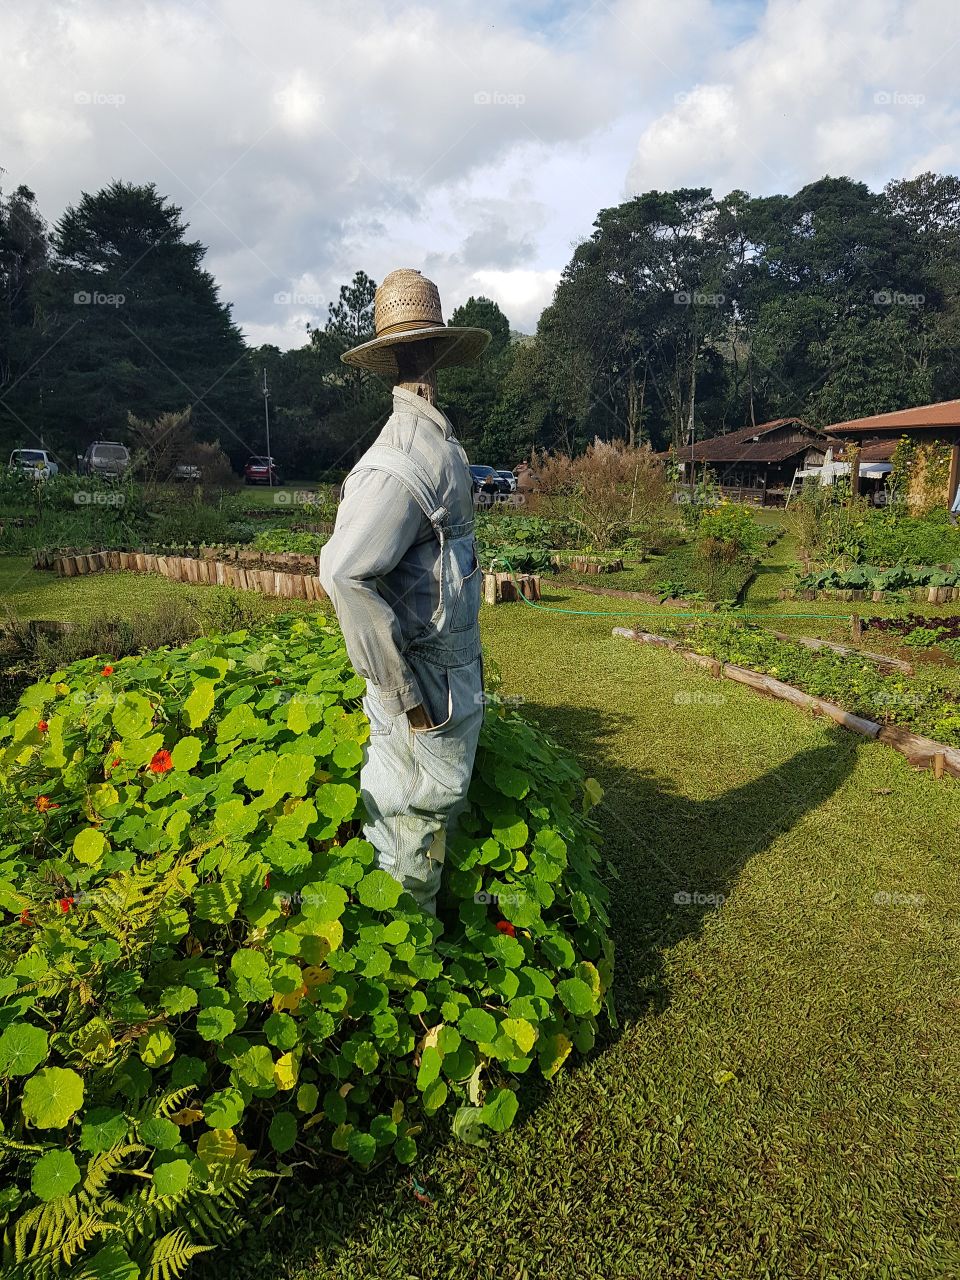 Scarecrow in the vegetable garden